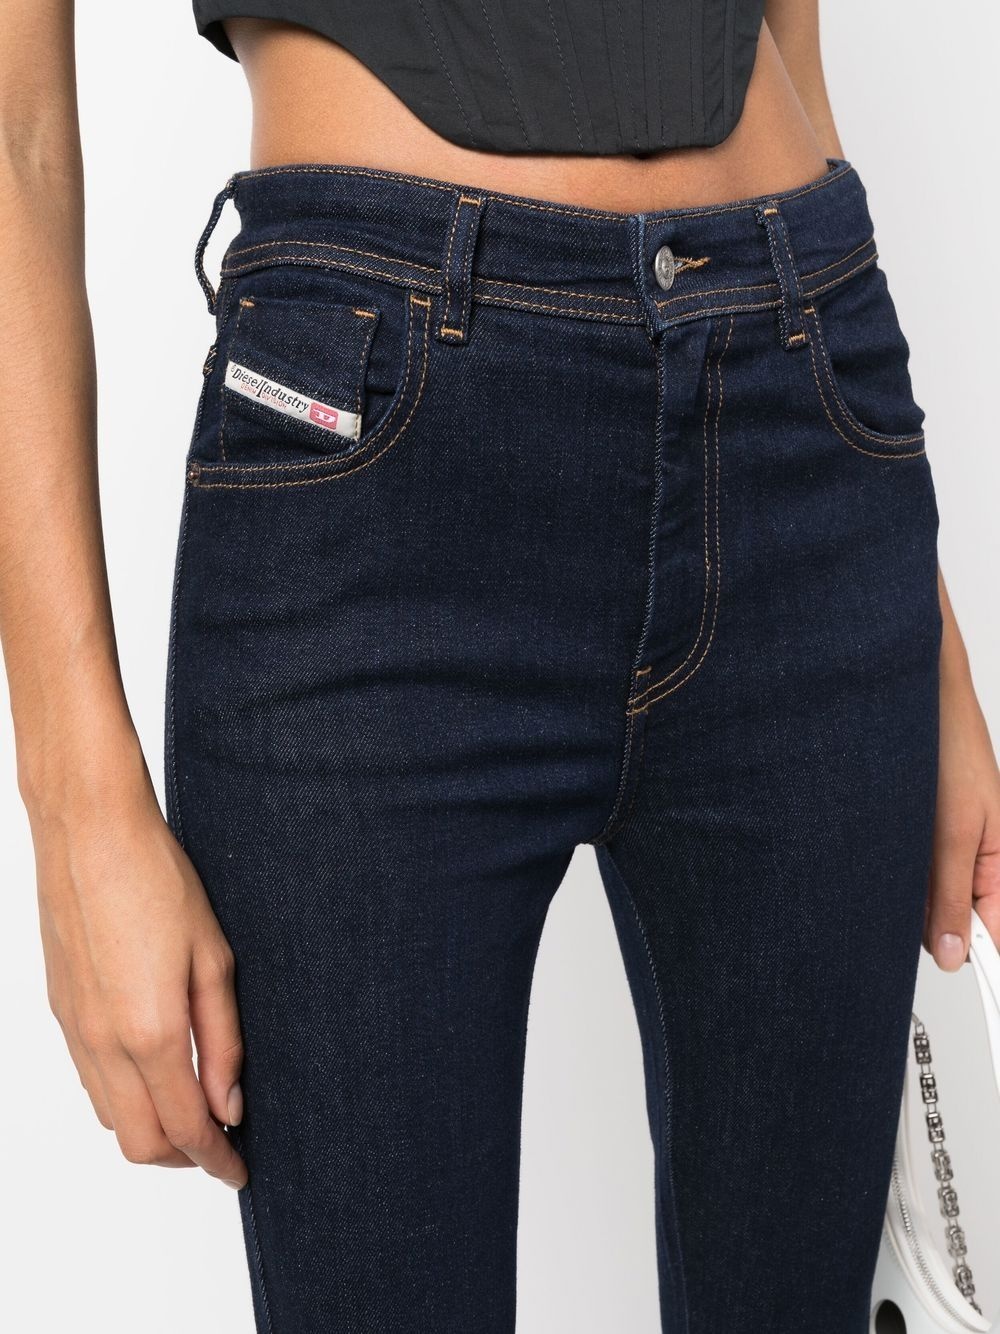 Slandy skinny jeans - 5